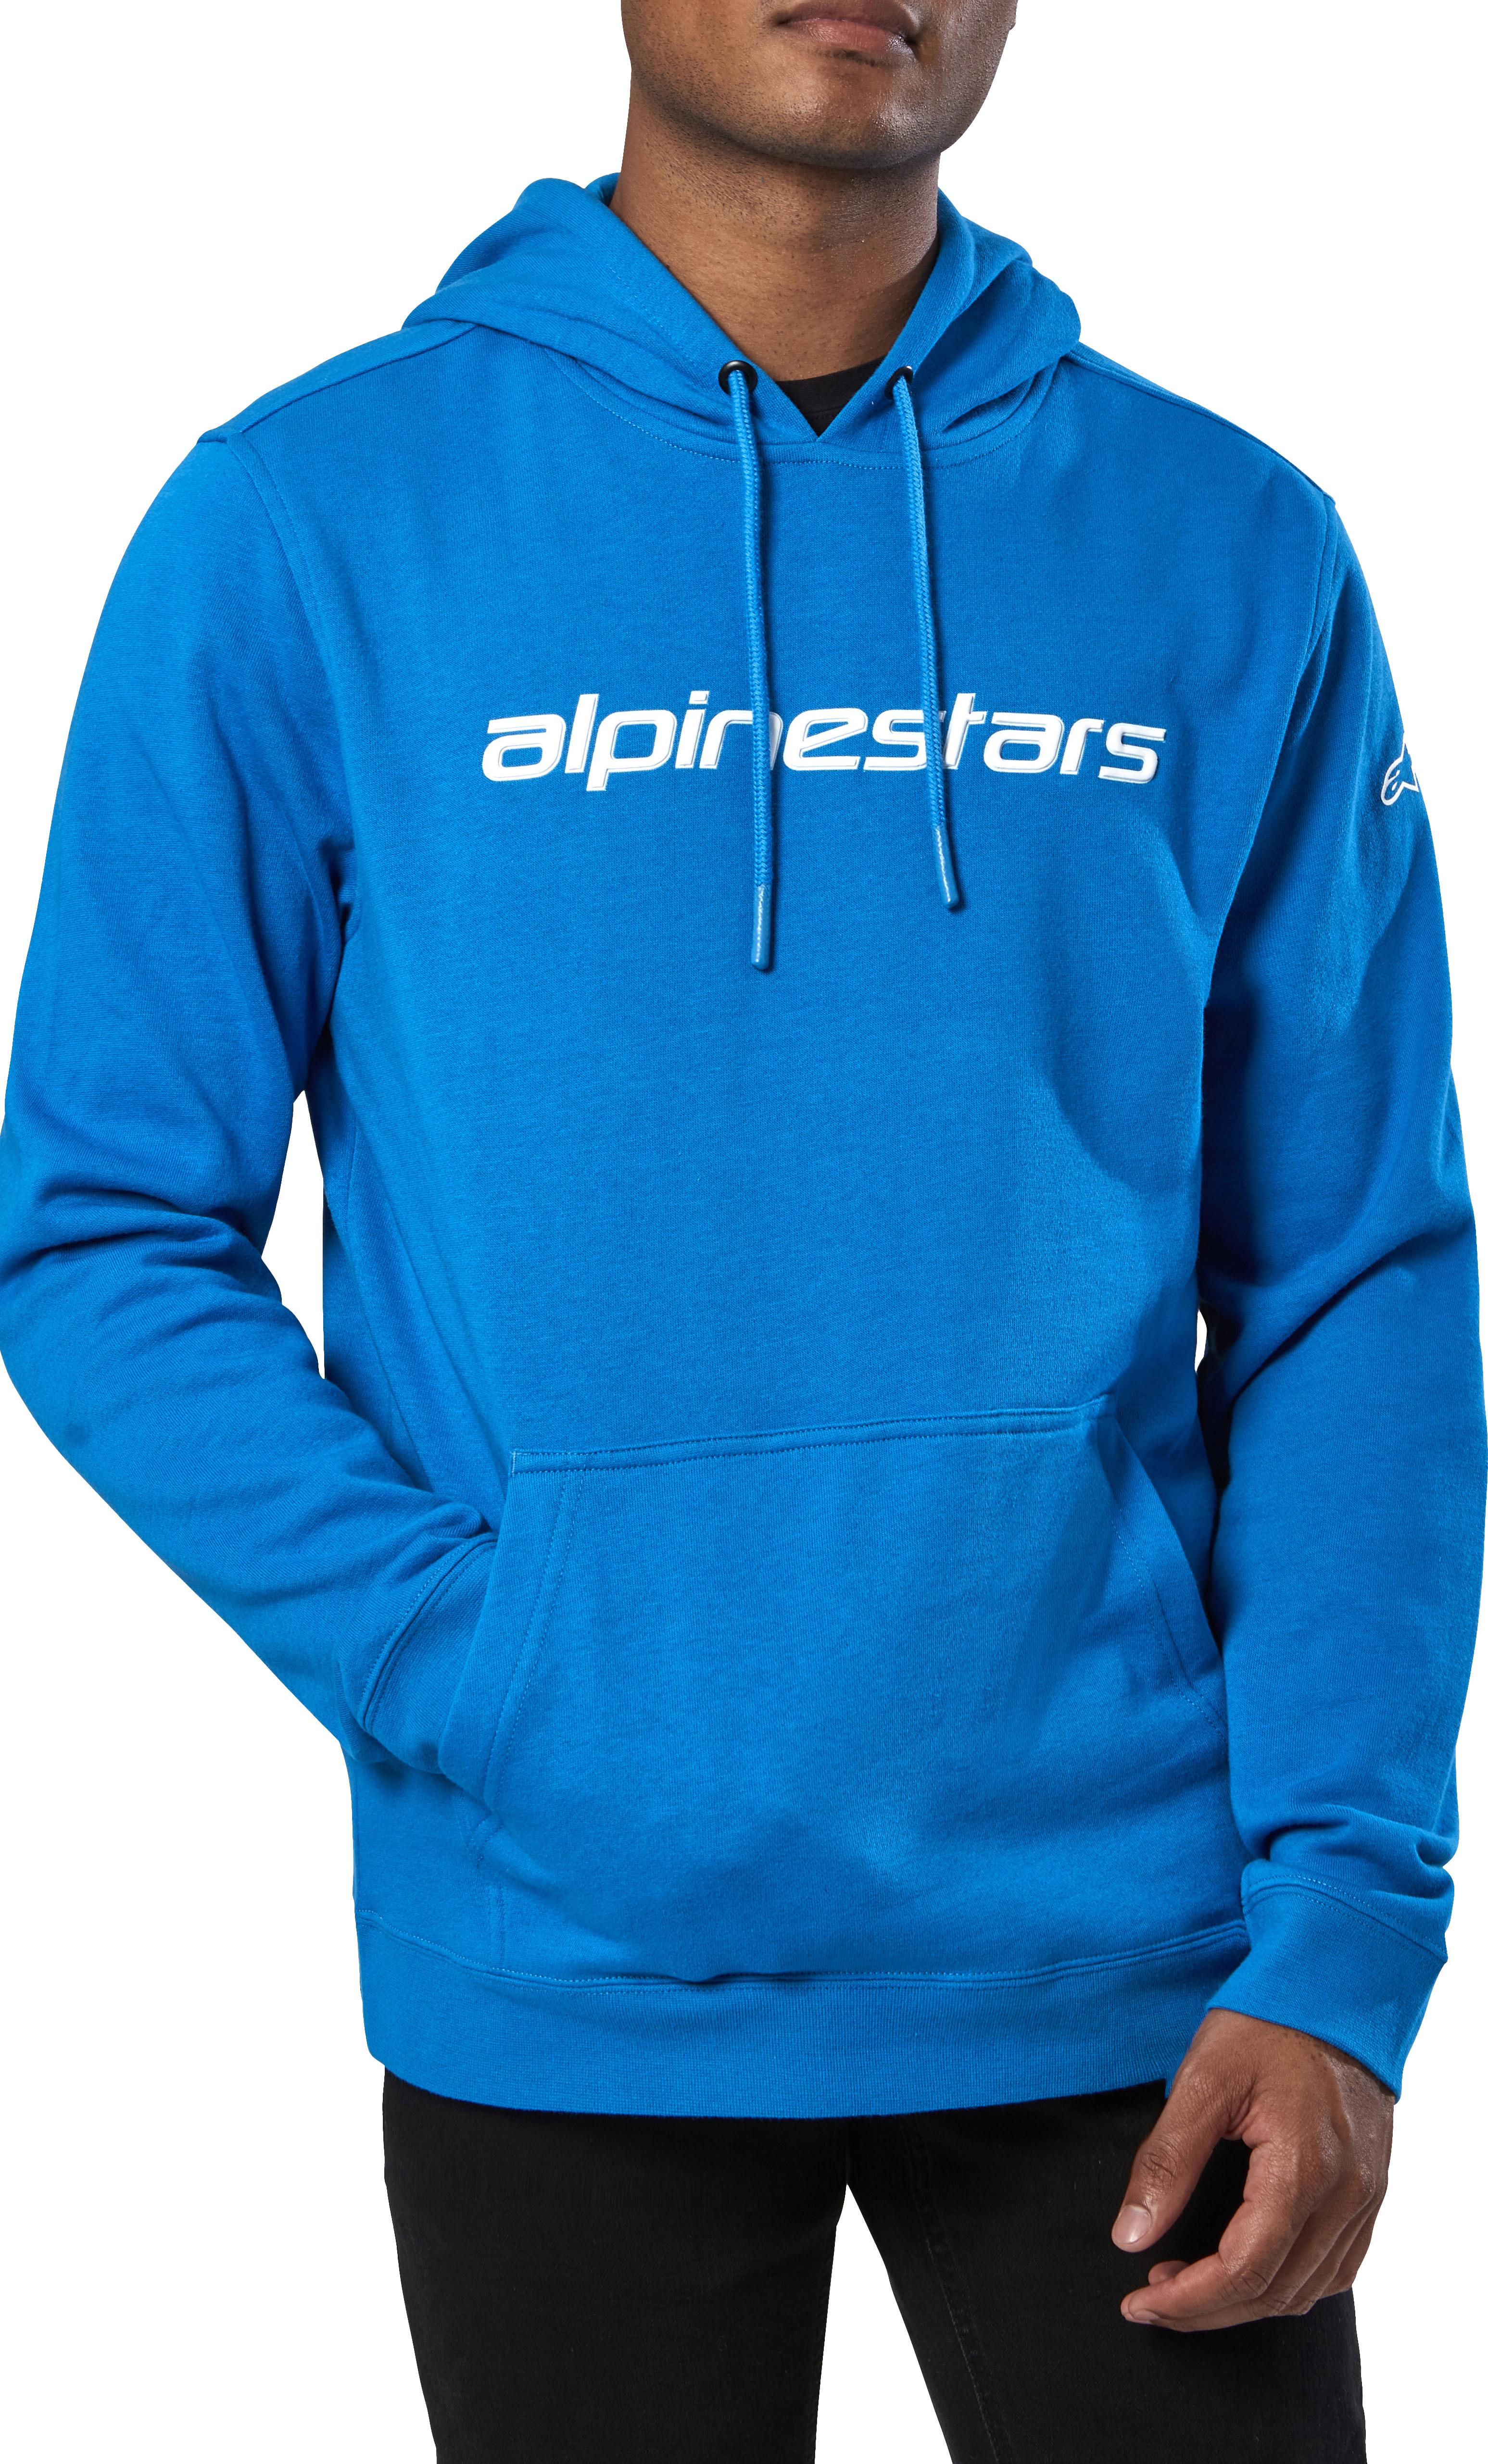 Alpinestars Linear Hoodie - Bright Blue/white